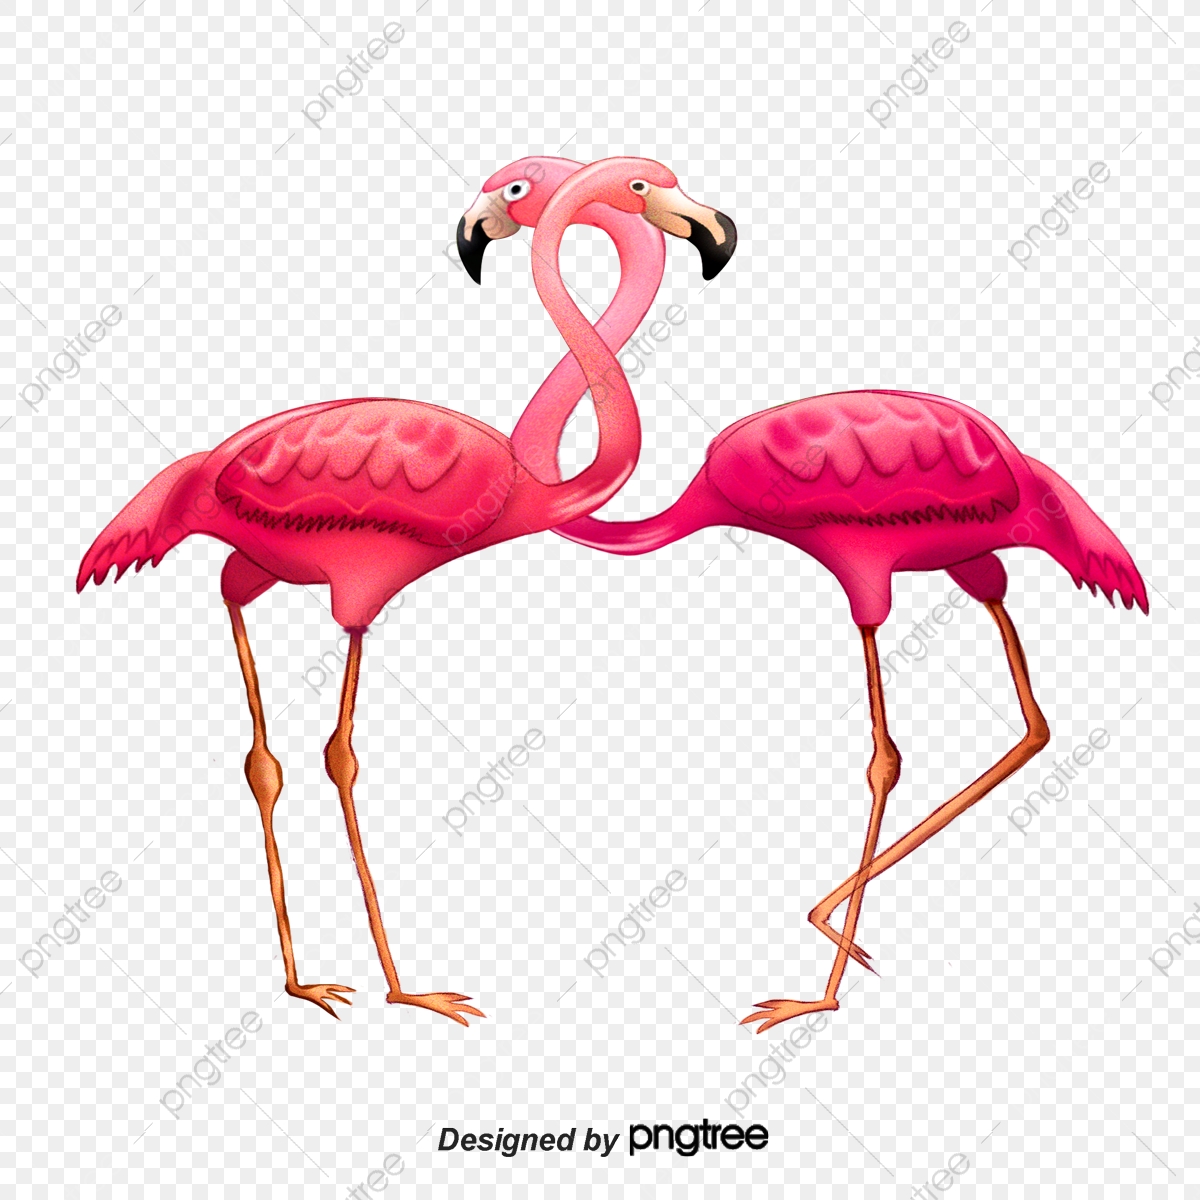 lawn flamingo clipart